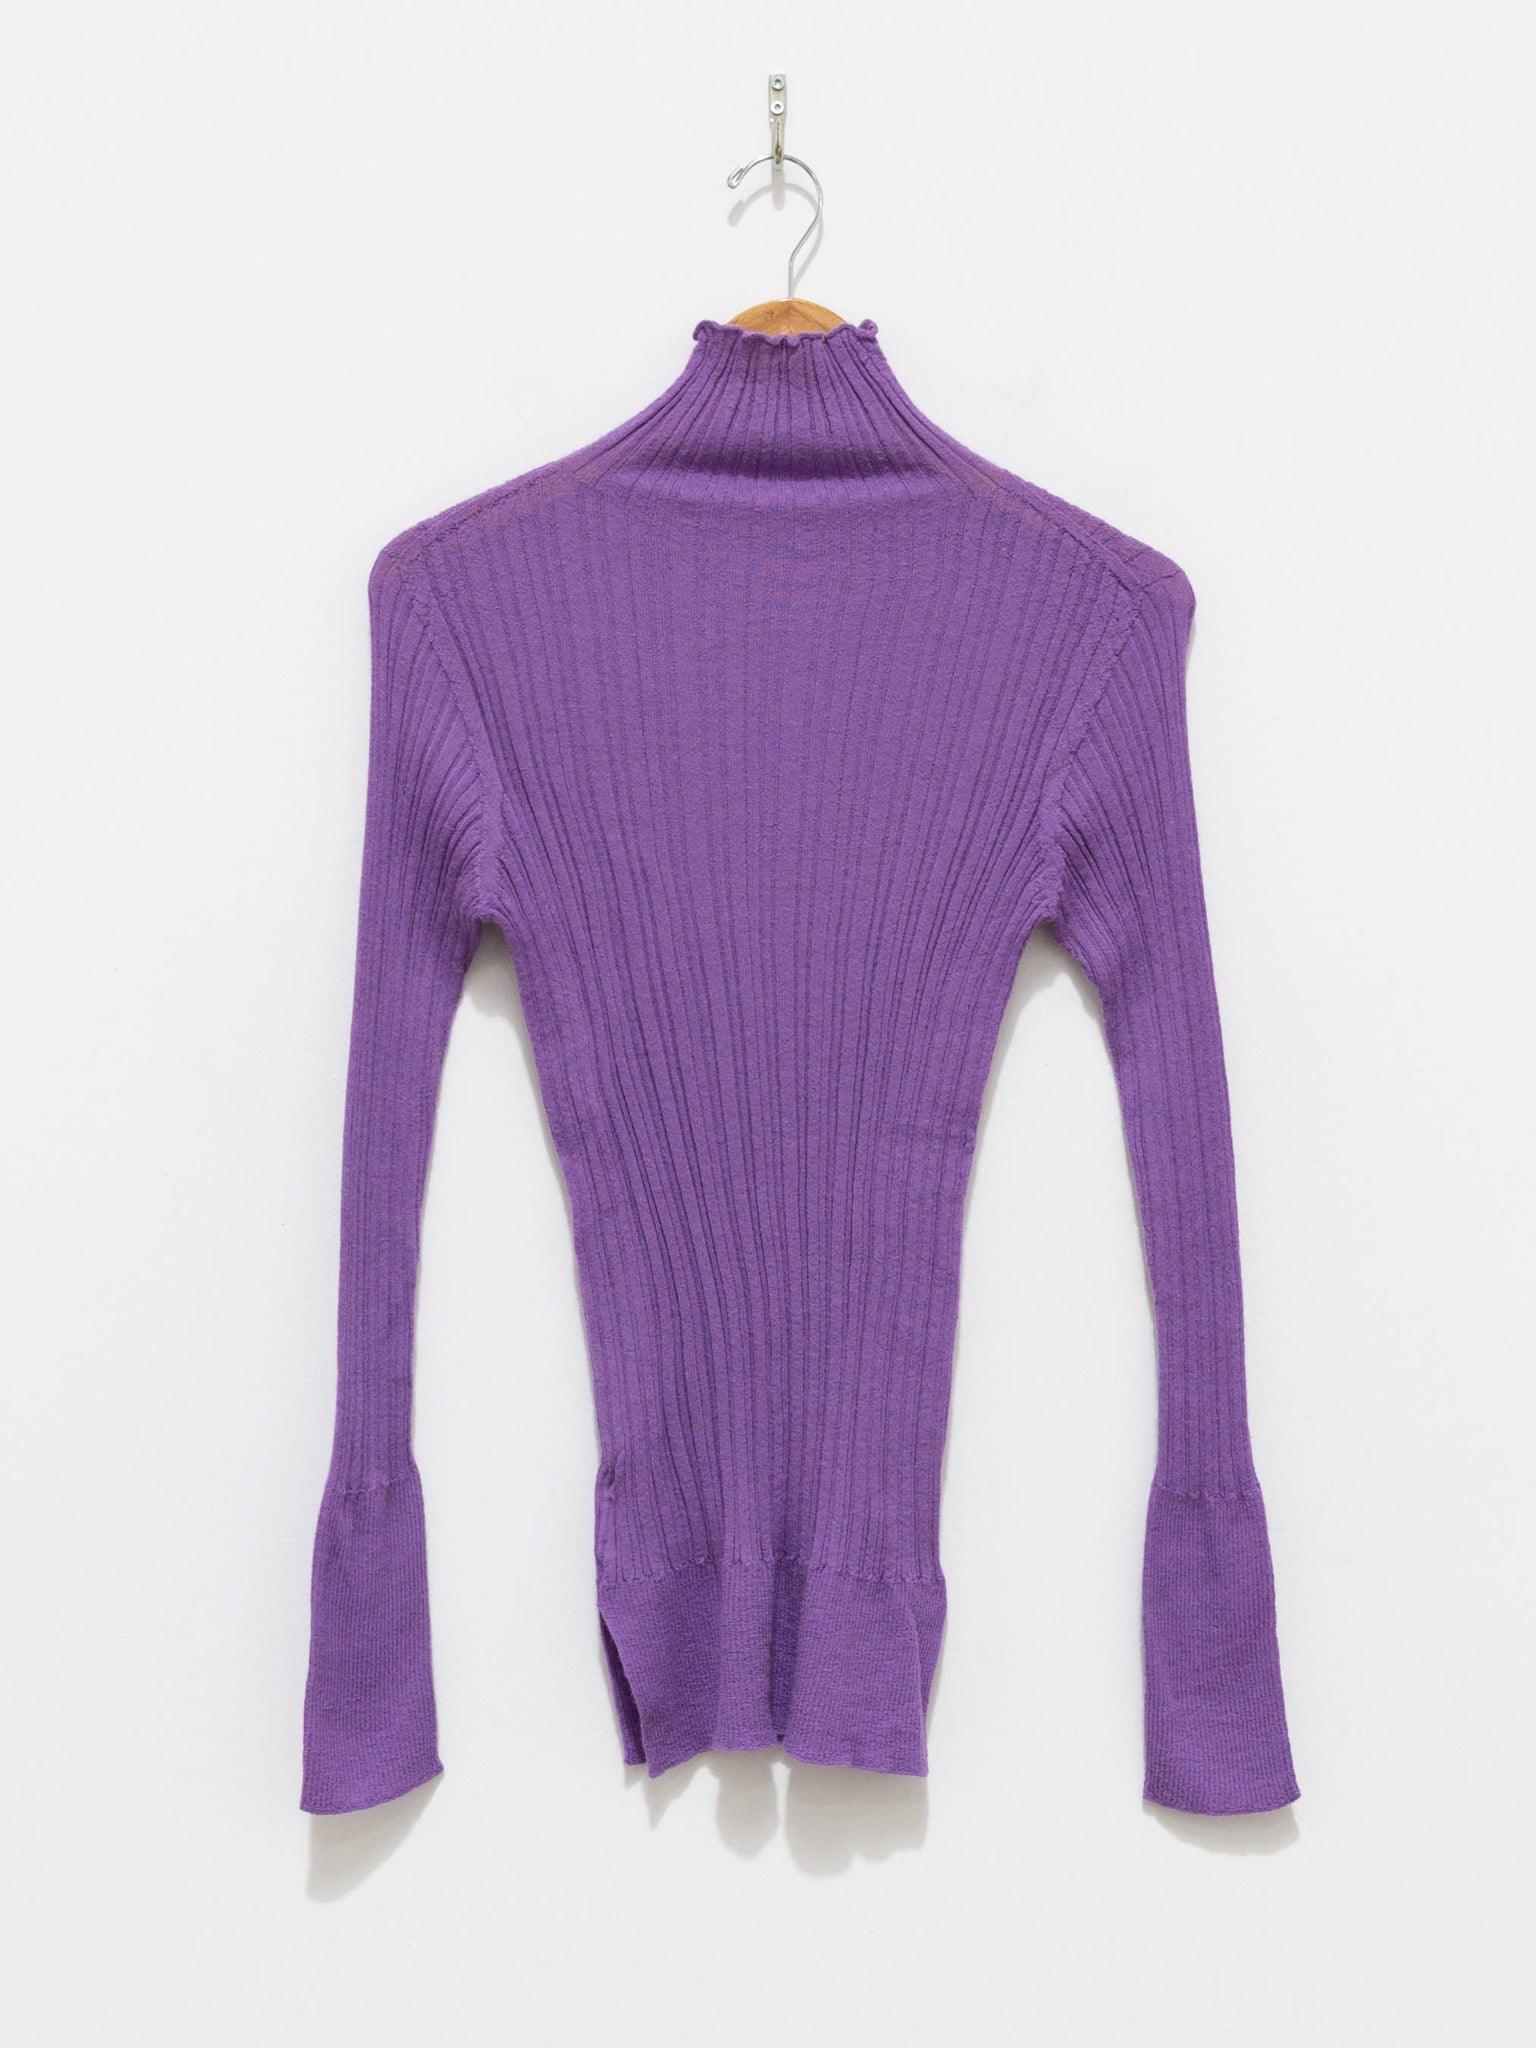 Namu Shop - Unfil Baby Suri Alpaca High Neck Sweater - Violet